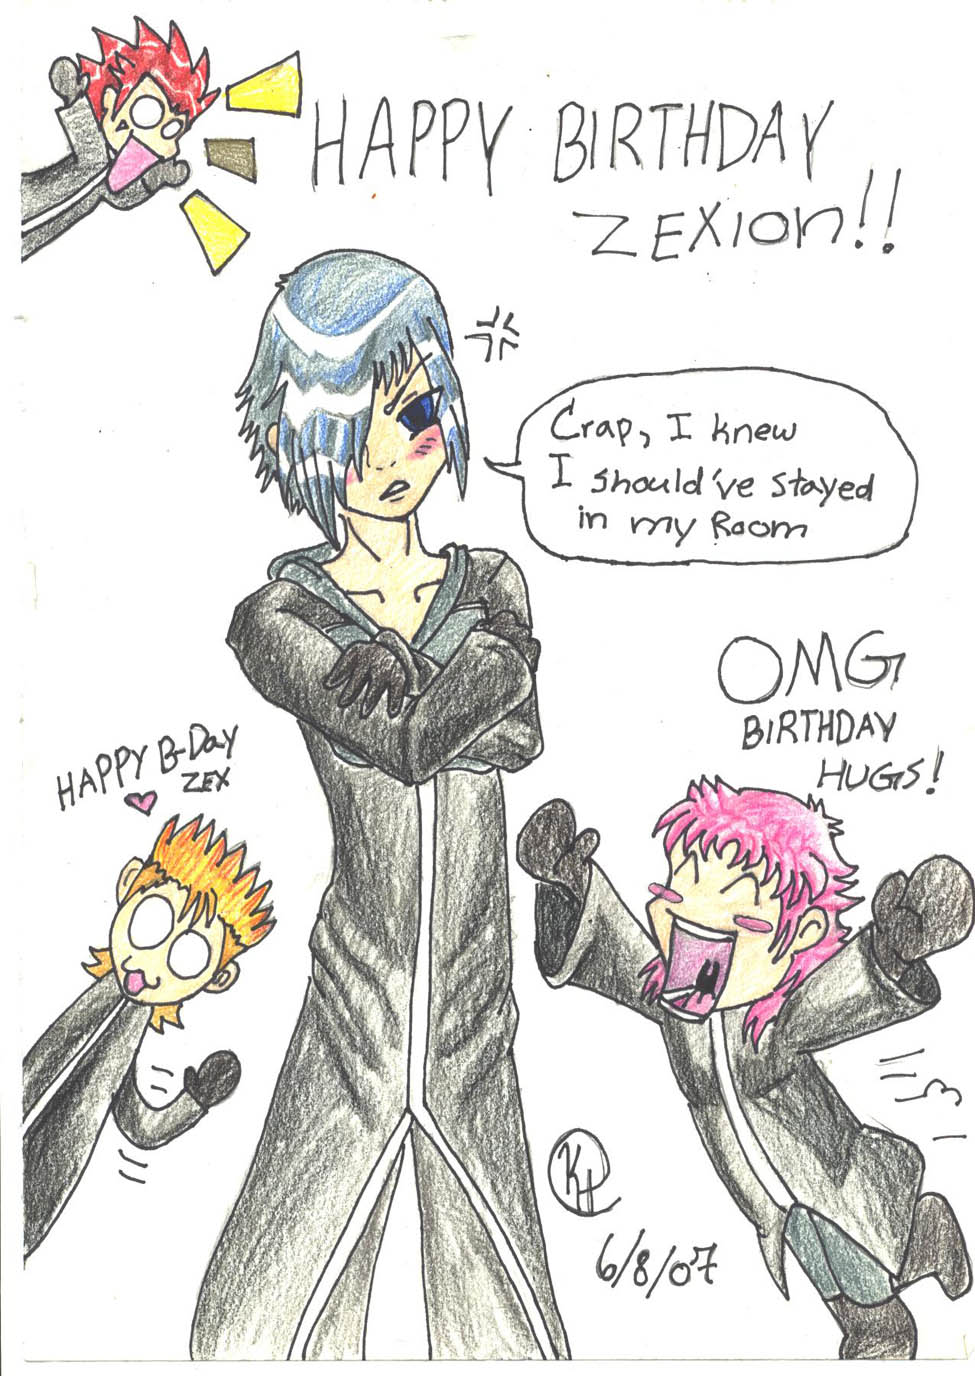 happy b-day Zexion by crazykid15